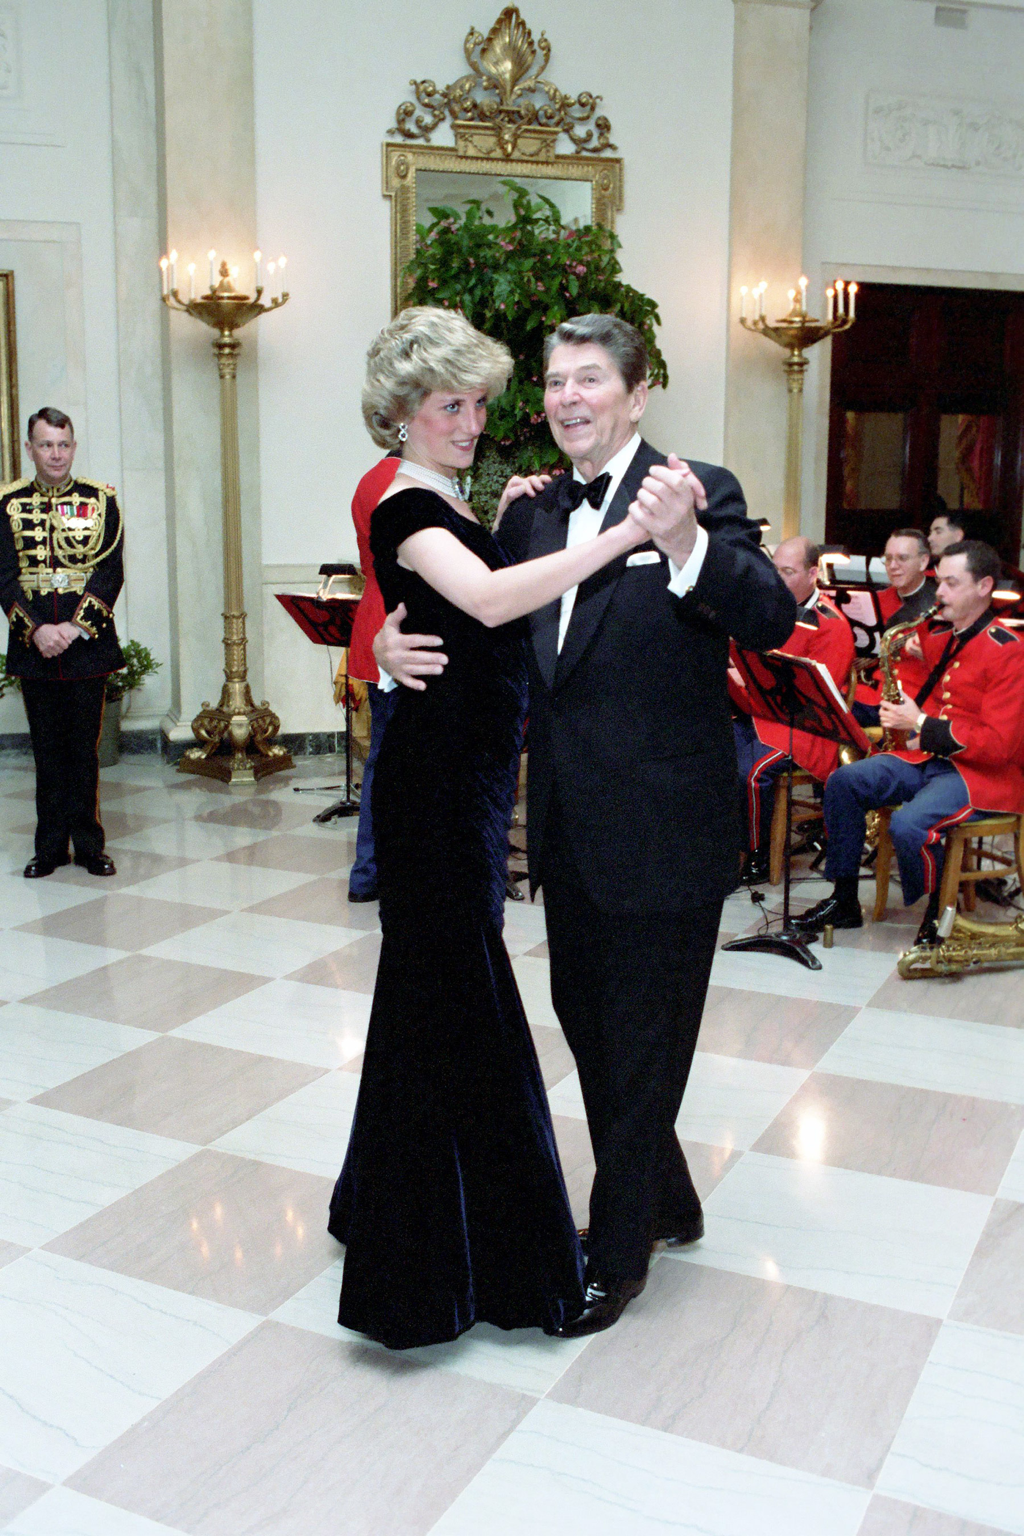 Princess Diana in Travolta gown dancing with American president Ronald Reagan, 11 November 2019